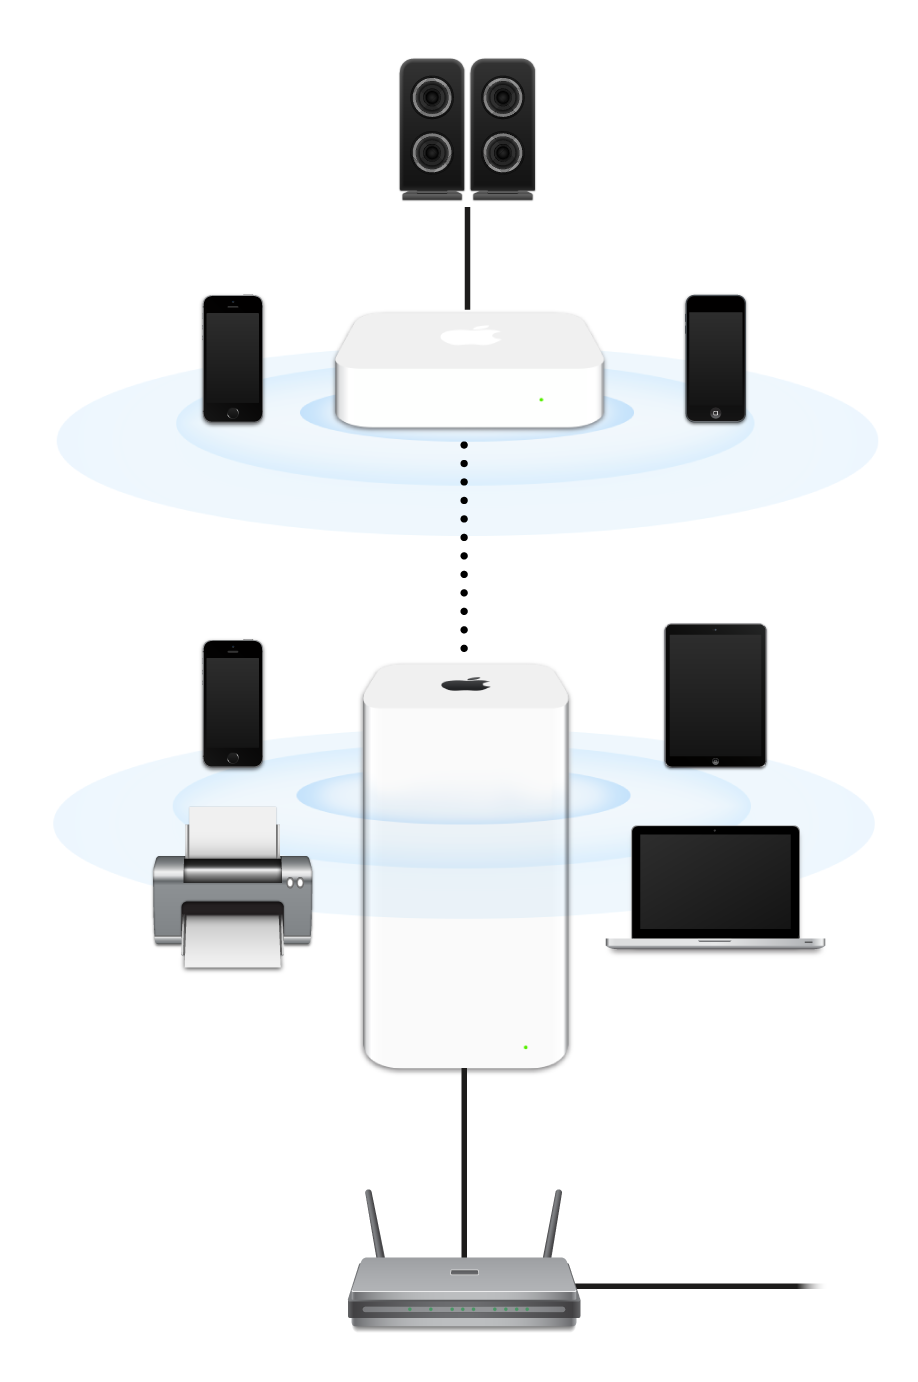 AirPort Extreme 및 AirPort Express를 포함하는 확장된 네트워크가 모뎀에 연결되어 다양한 기기로 송신하는 모습.